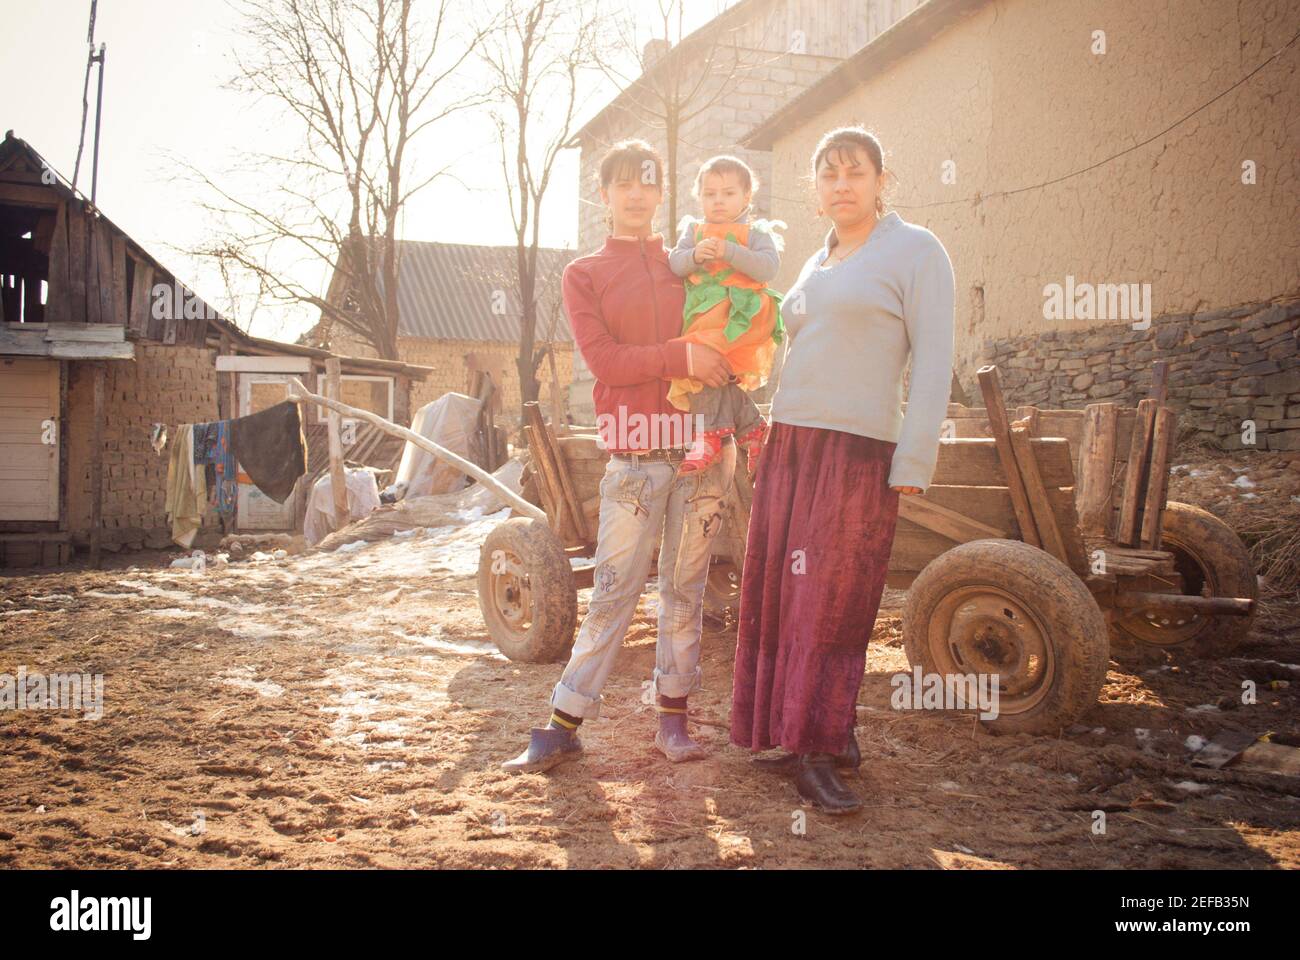 SEREDNIE, UKRAINE - MARCH 09, 2011: early motherhood is a reality in Romani community Stock Photo